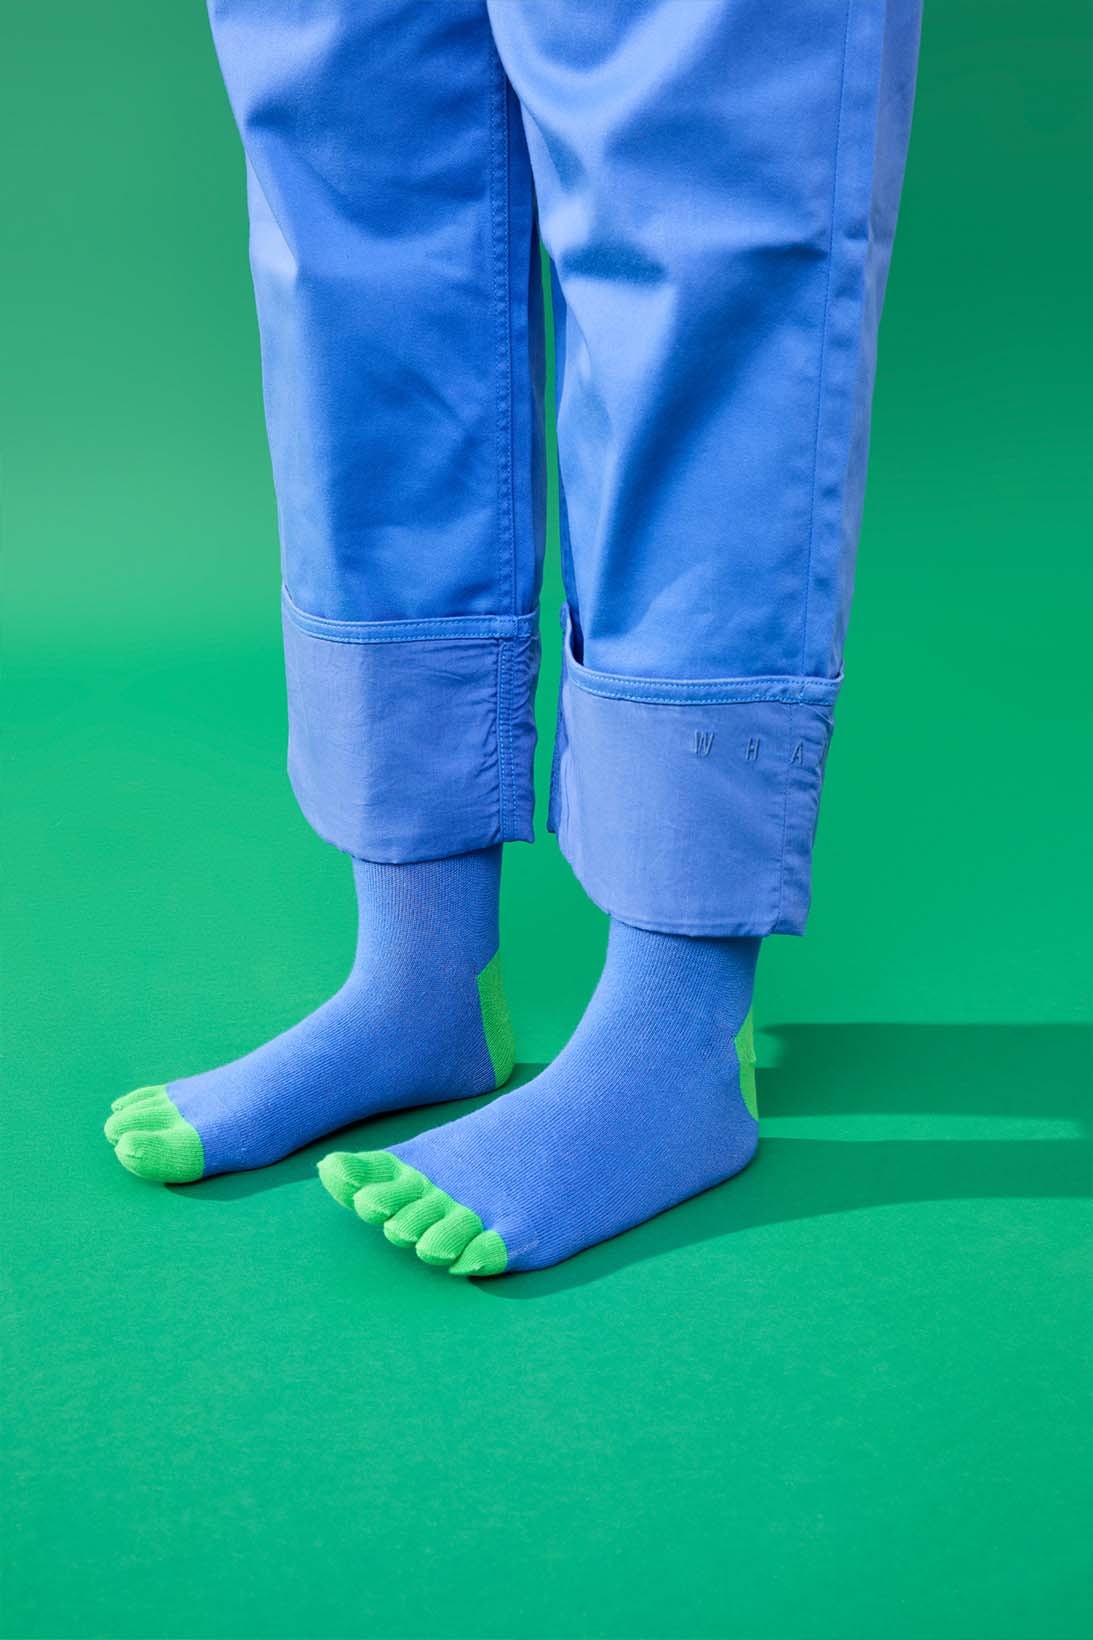 Vans Tierra Whack Chinos Socks Blue Green Collaboration